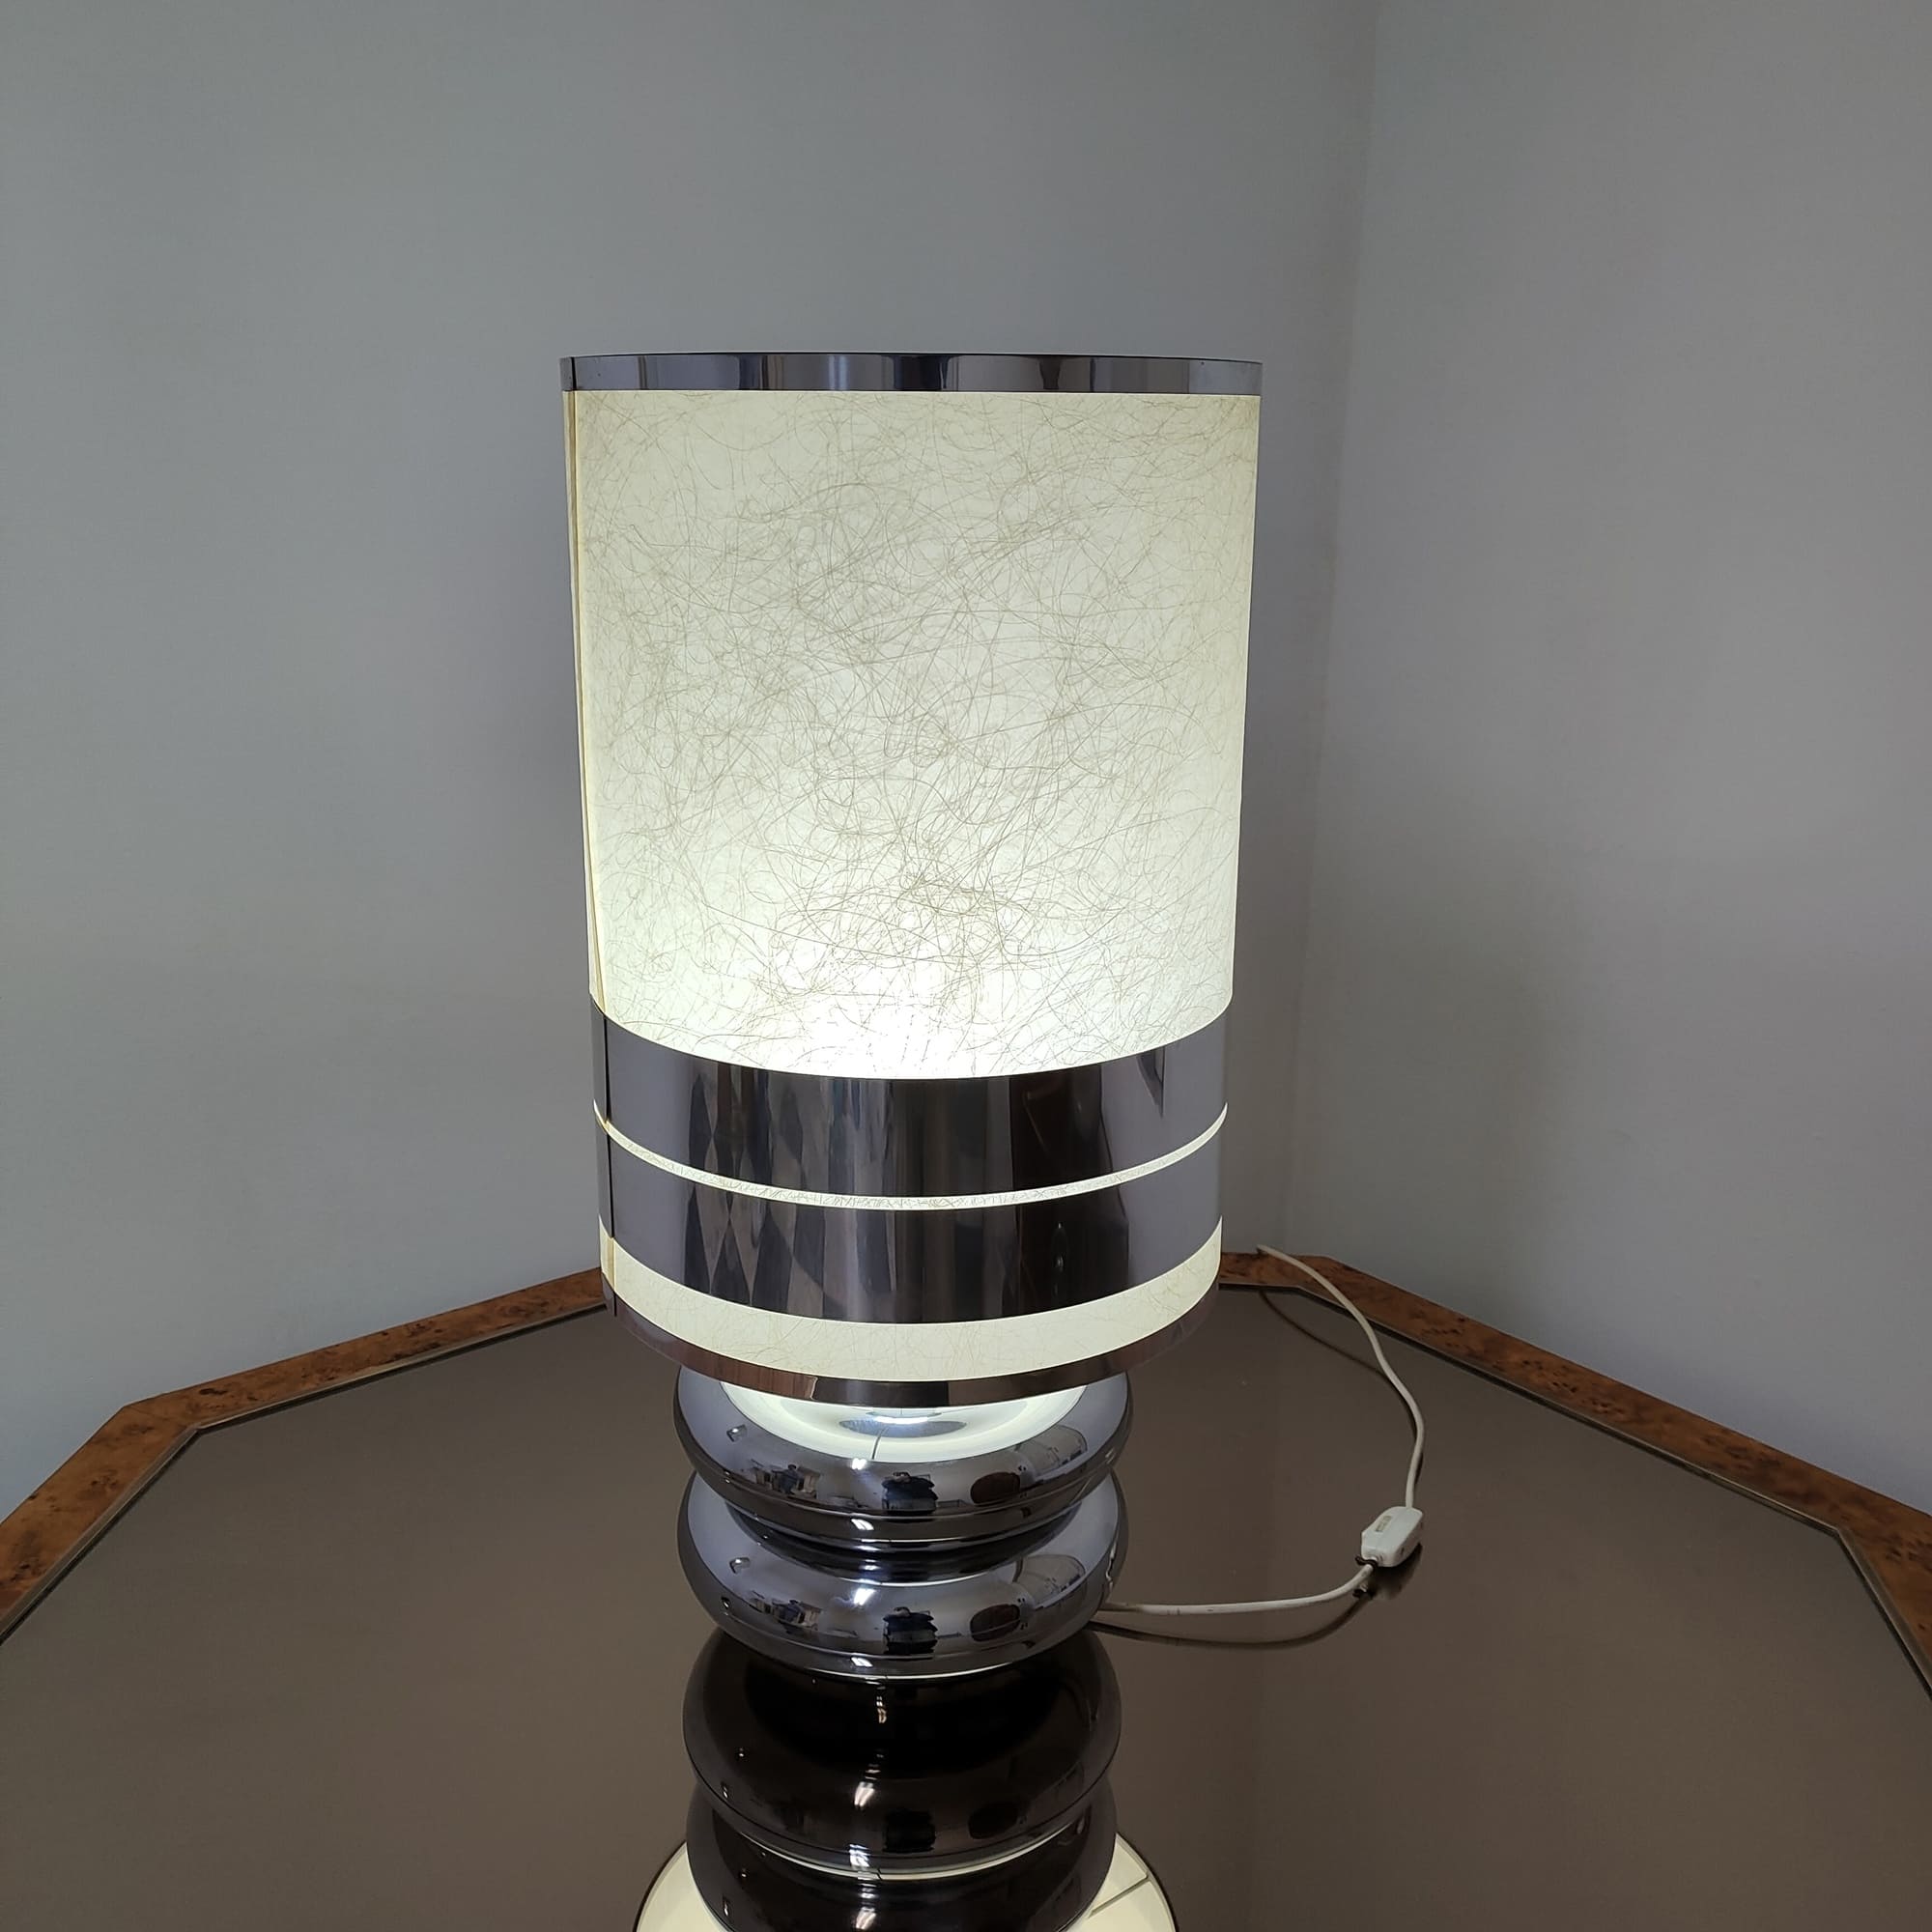 visionidepoca-lampada-anni-70-in-acciaio-con-paralume-originale-fibra-e-acciaio-accesa-luce-naturale-made-in-italy